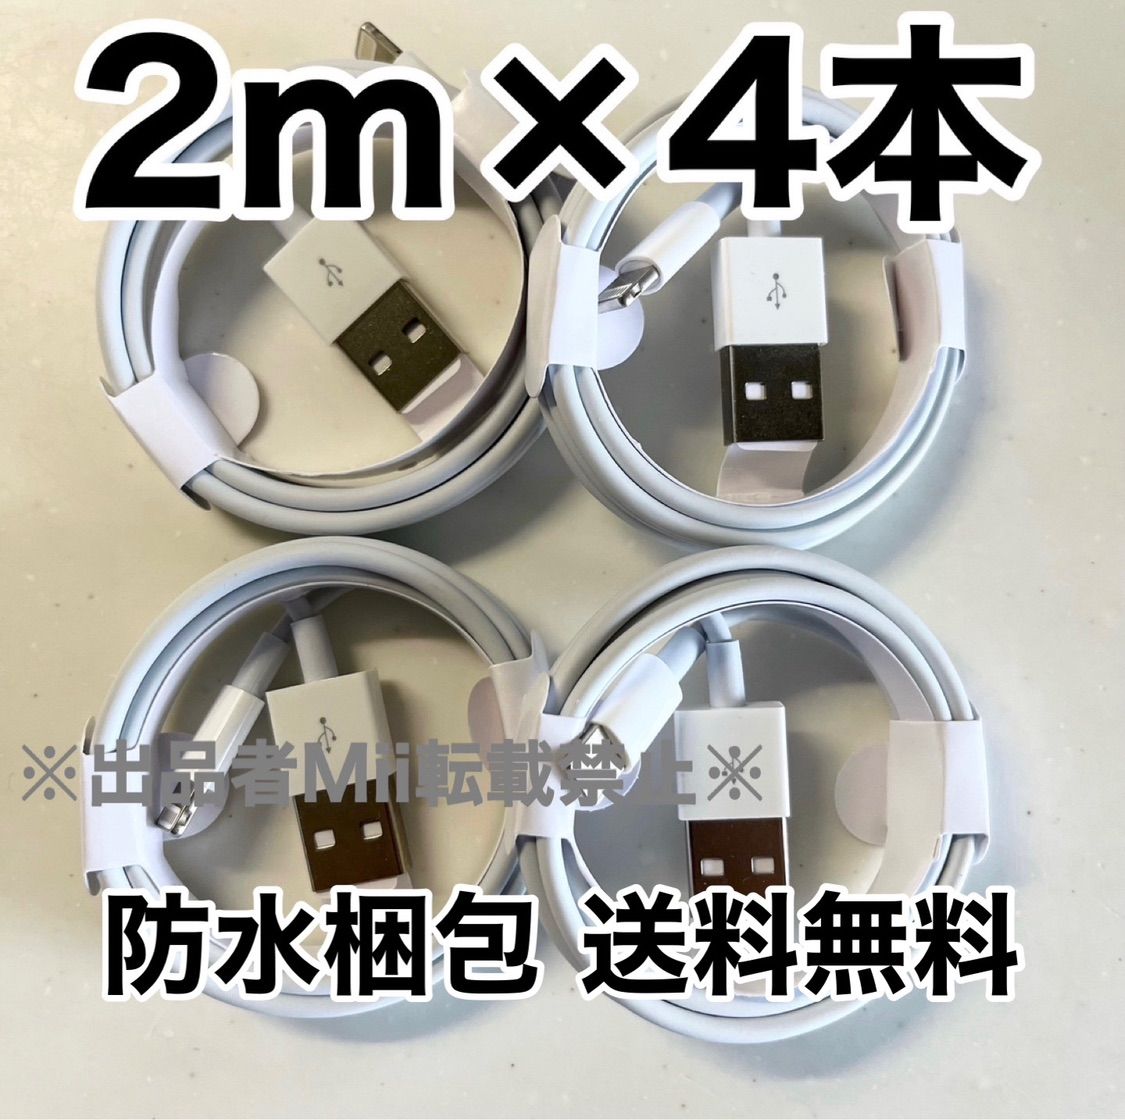 2m×4本セット iPhone 充電器 ライトニングケーブル 純正品質 USB充電器